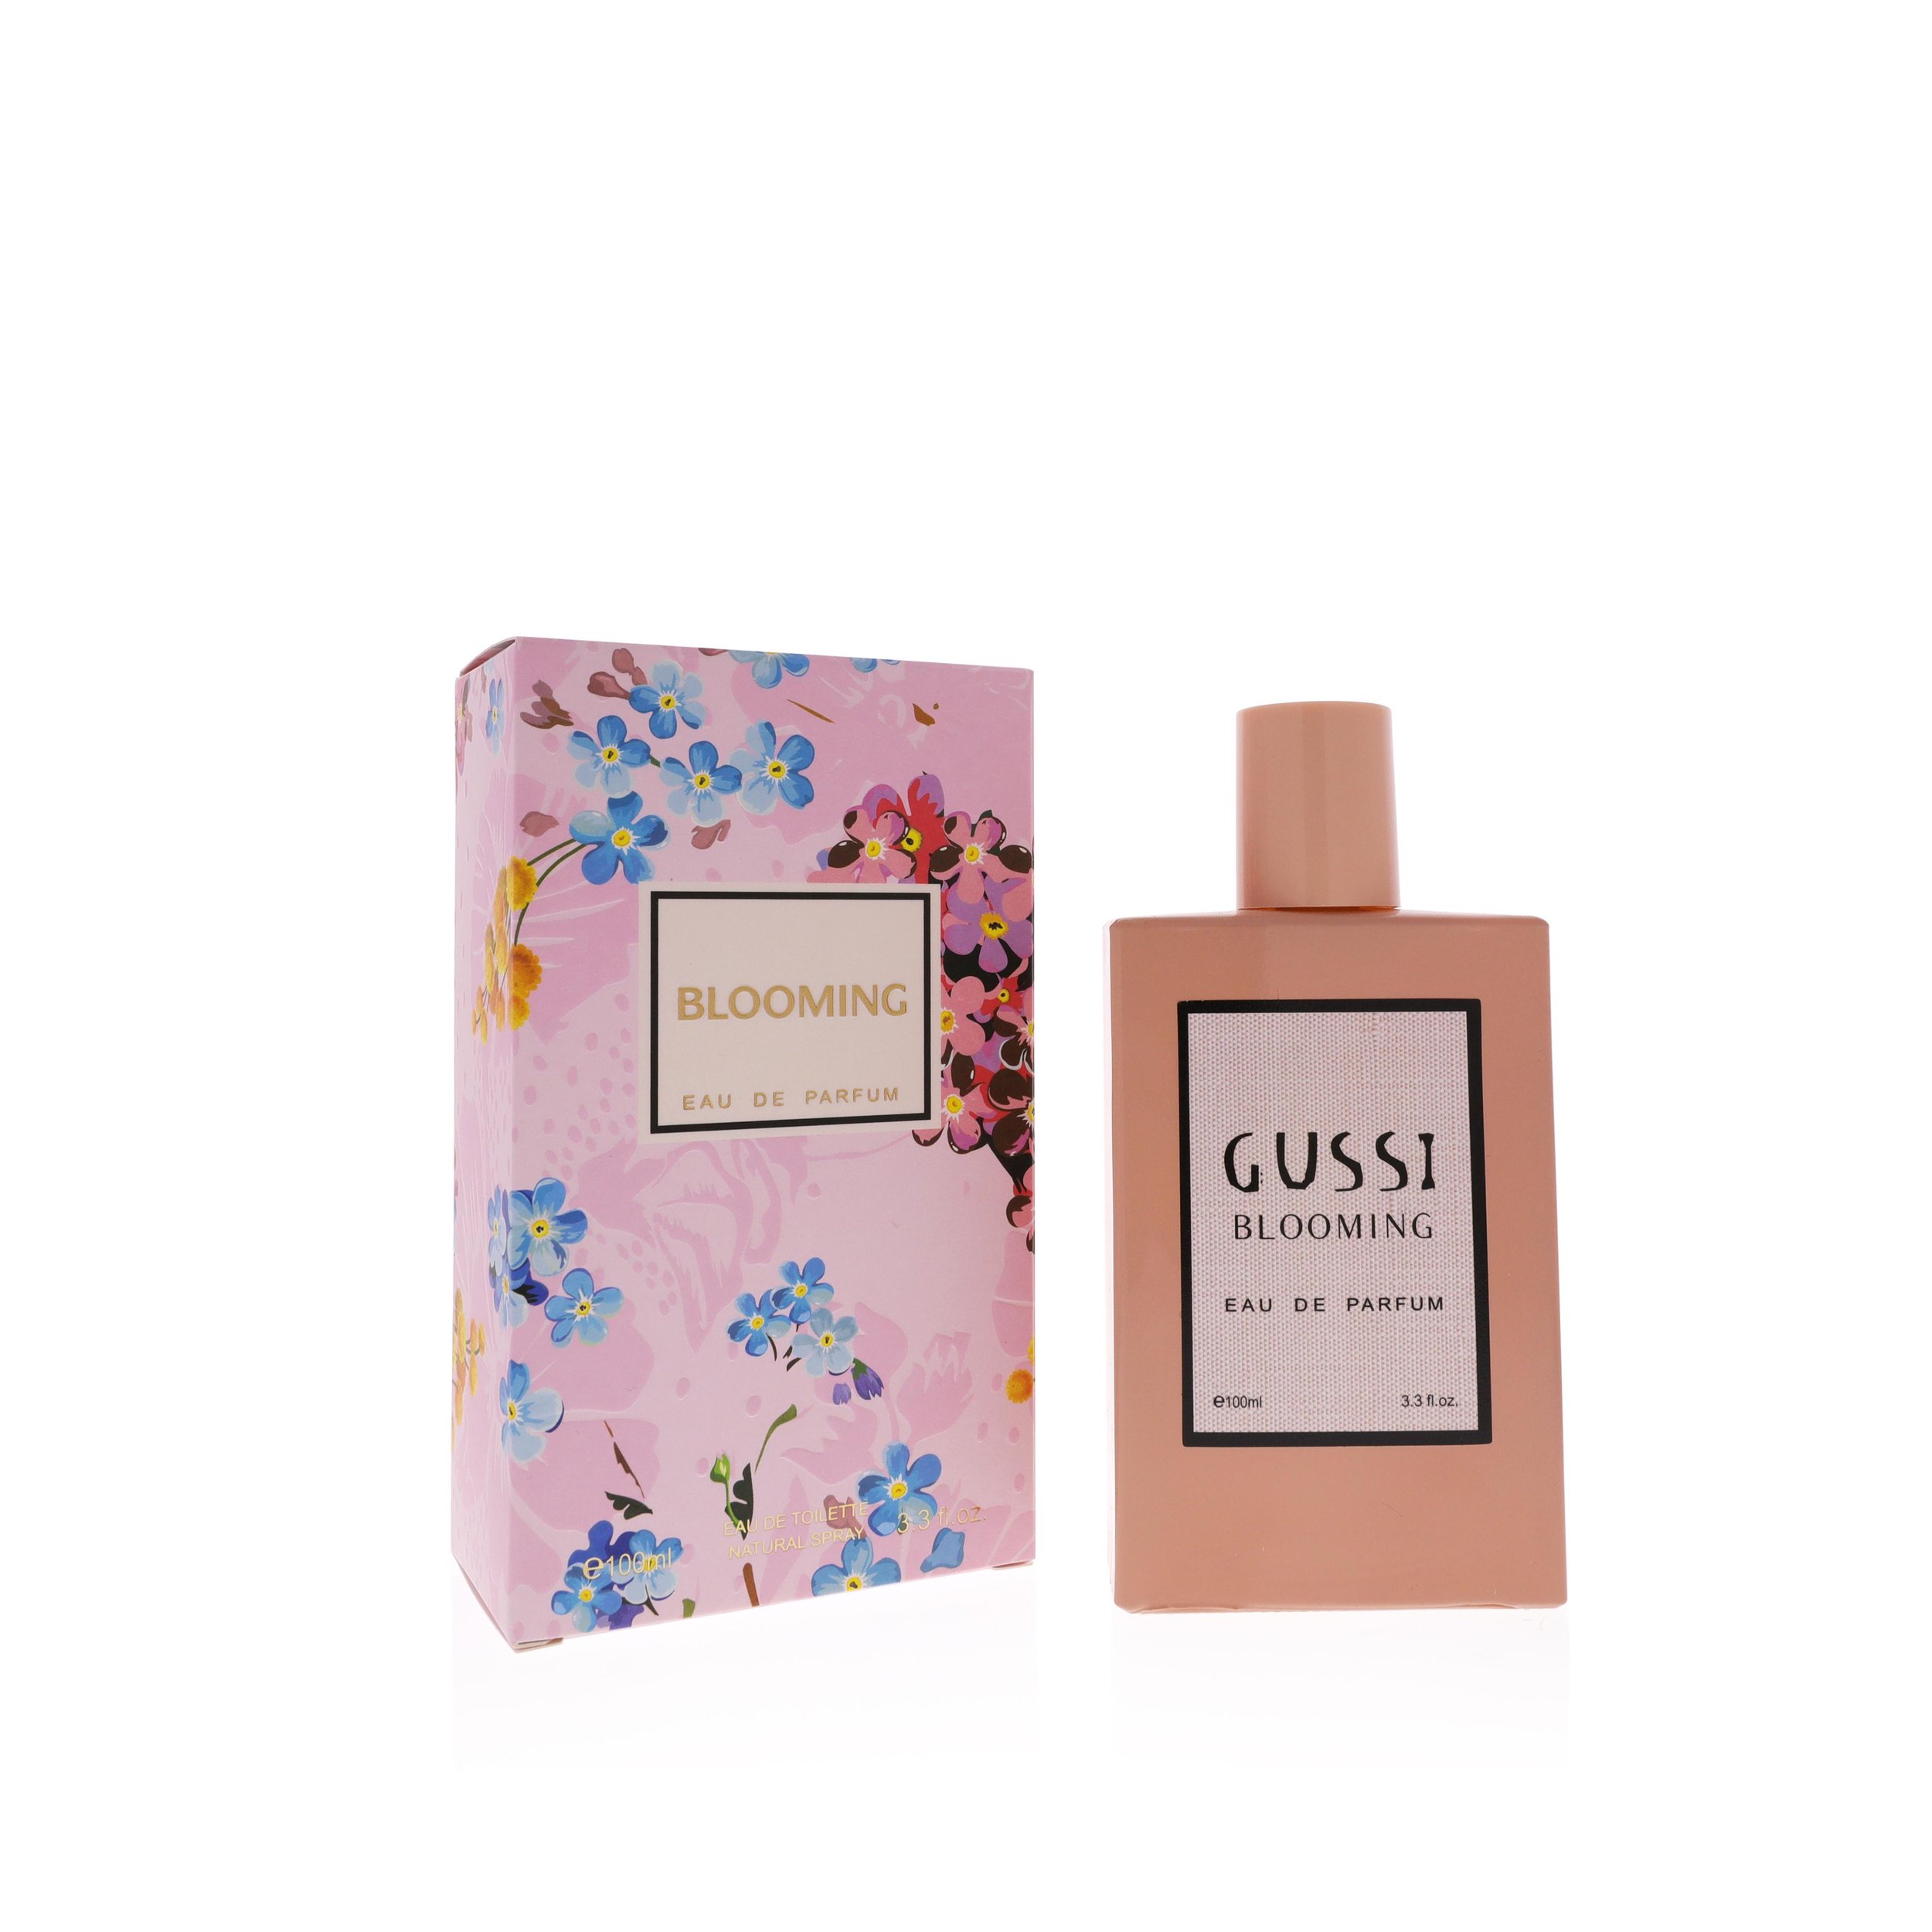 royal fragrance perfume